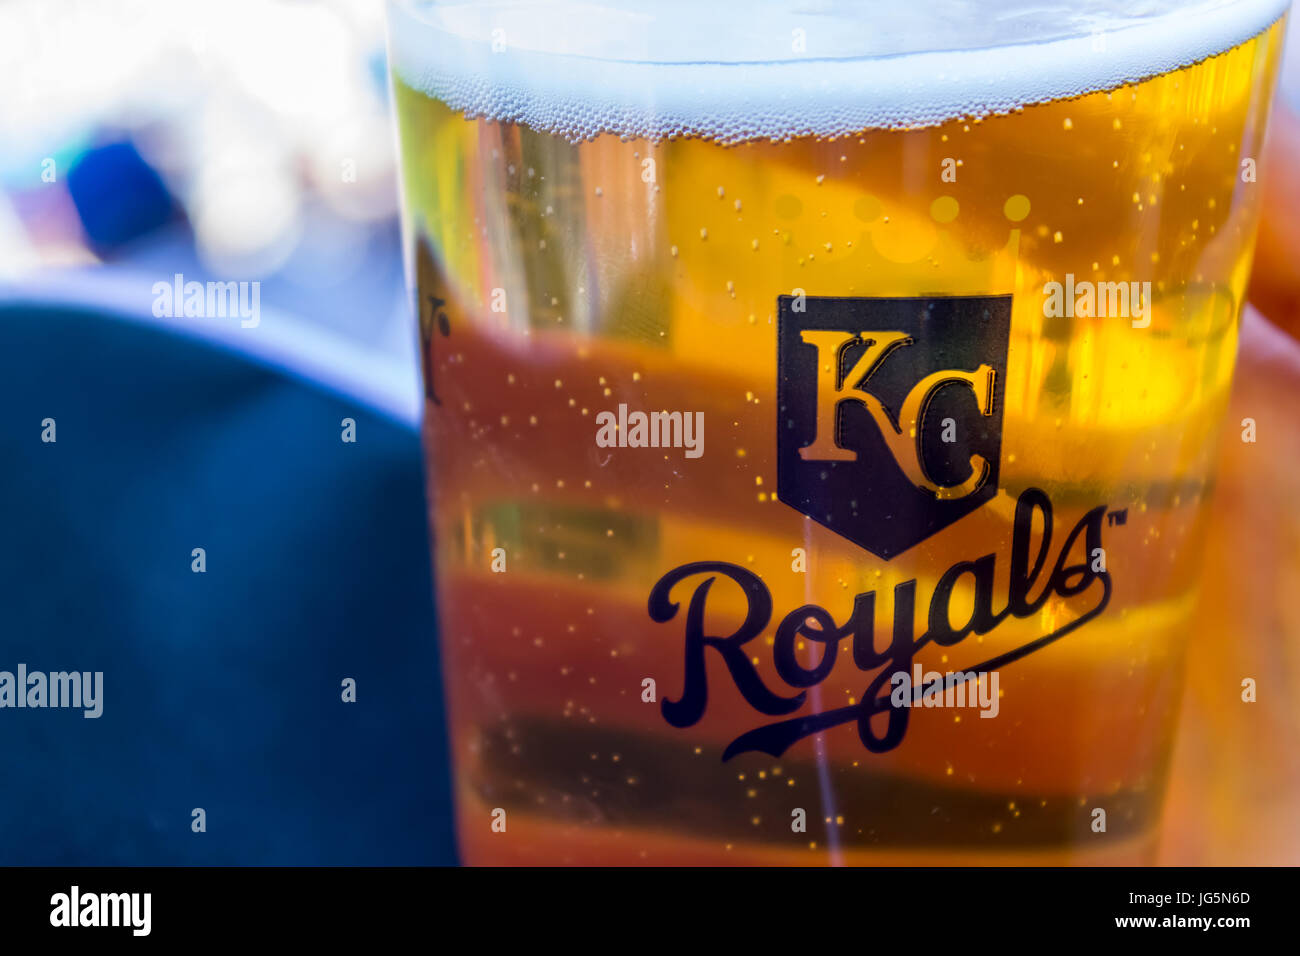 Kansas City, Missouri negli Stati Uniti- 6/26/2017 dallo Stadio Kauffman birra con sede a Kansas City Royals logo sulla tazza Foto Stock